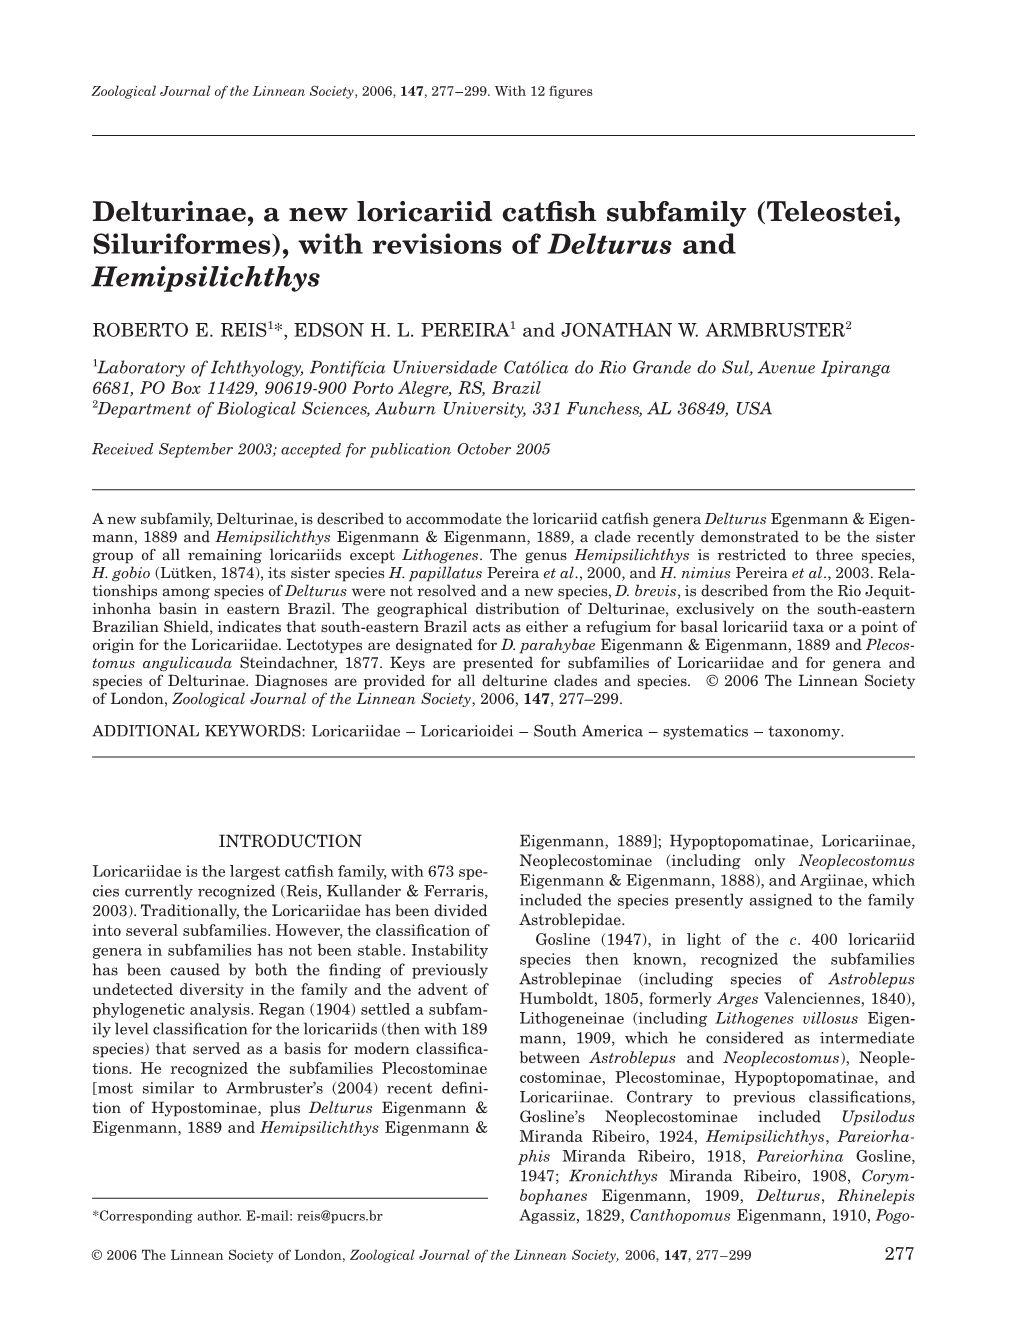 Delturinae, a New Loricariid Catfish Subfamily (Teleostei, Siluriformes)